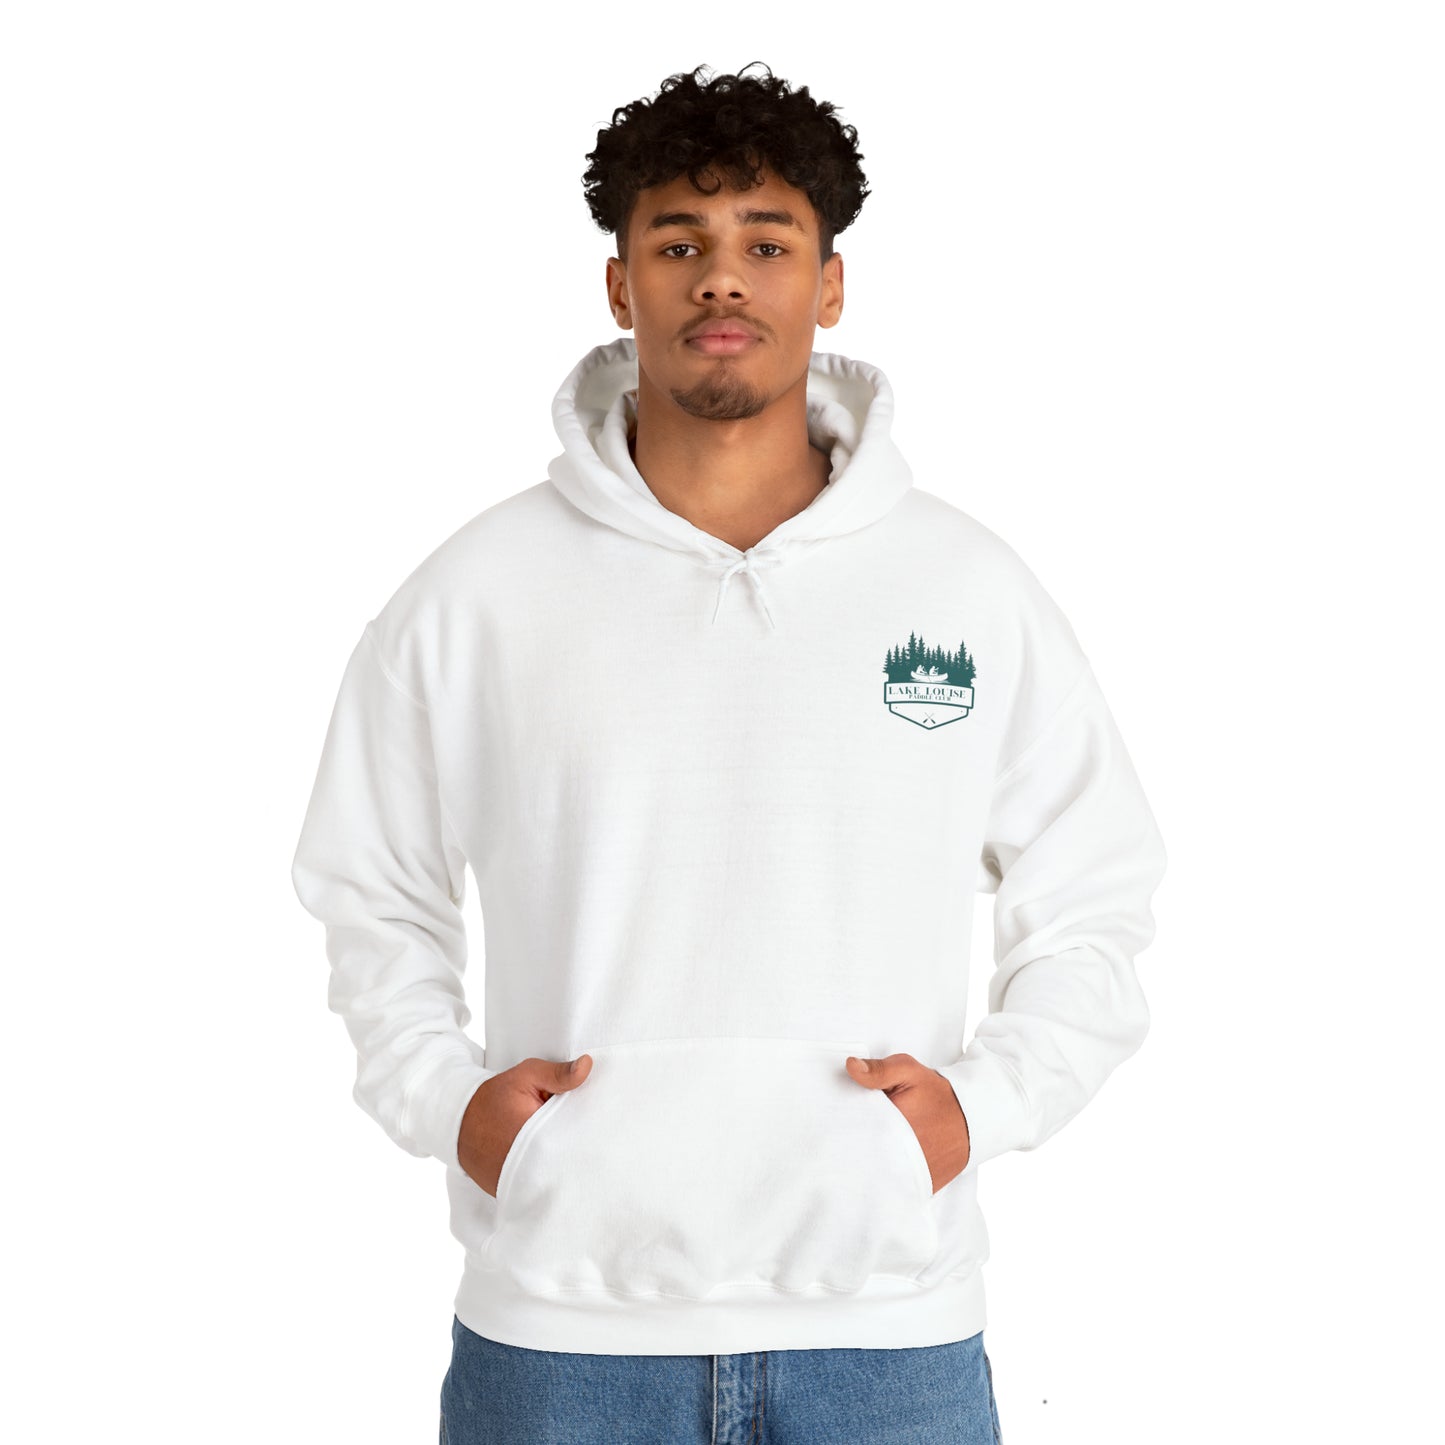 Lake Louise Paddle Club - Unisex Heavy Blend™ Hooded Sweatshirt